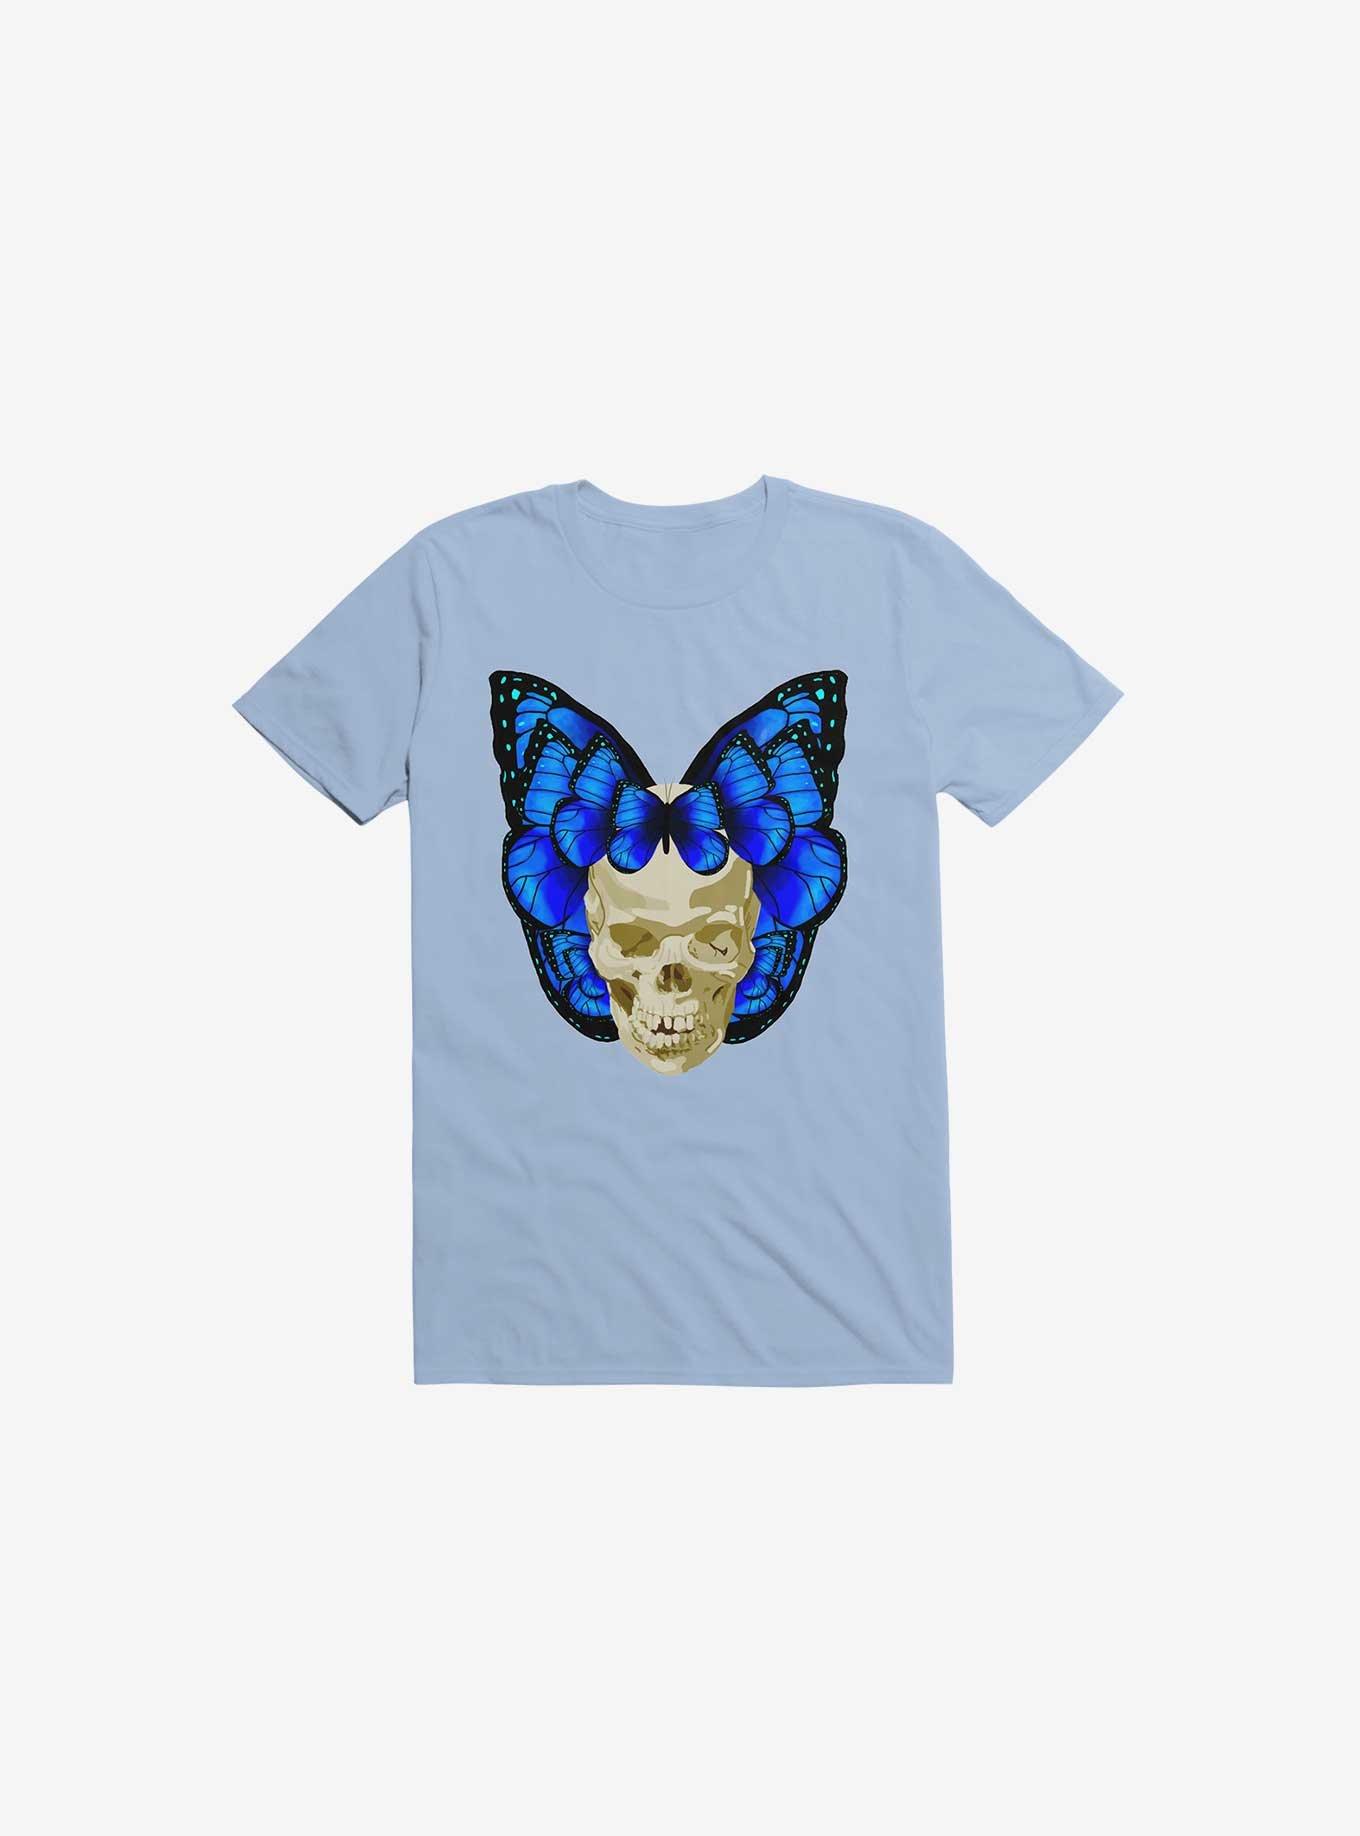 Wings Of Death Butterfly Skull Light Blue T-Shirt